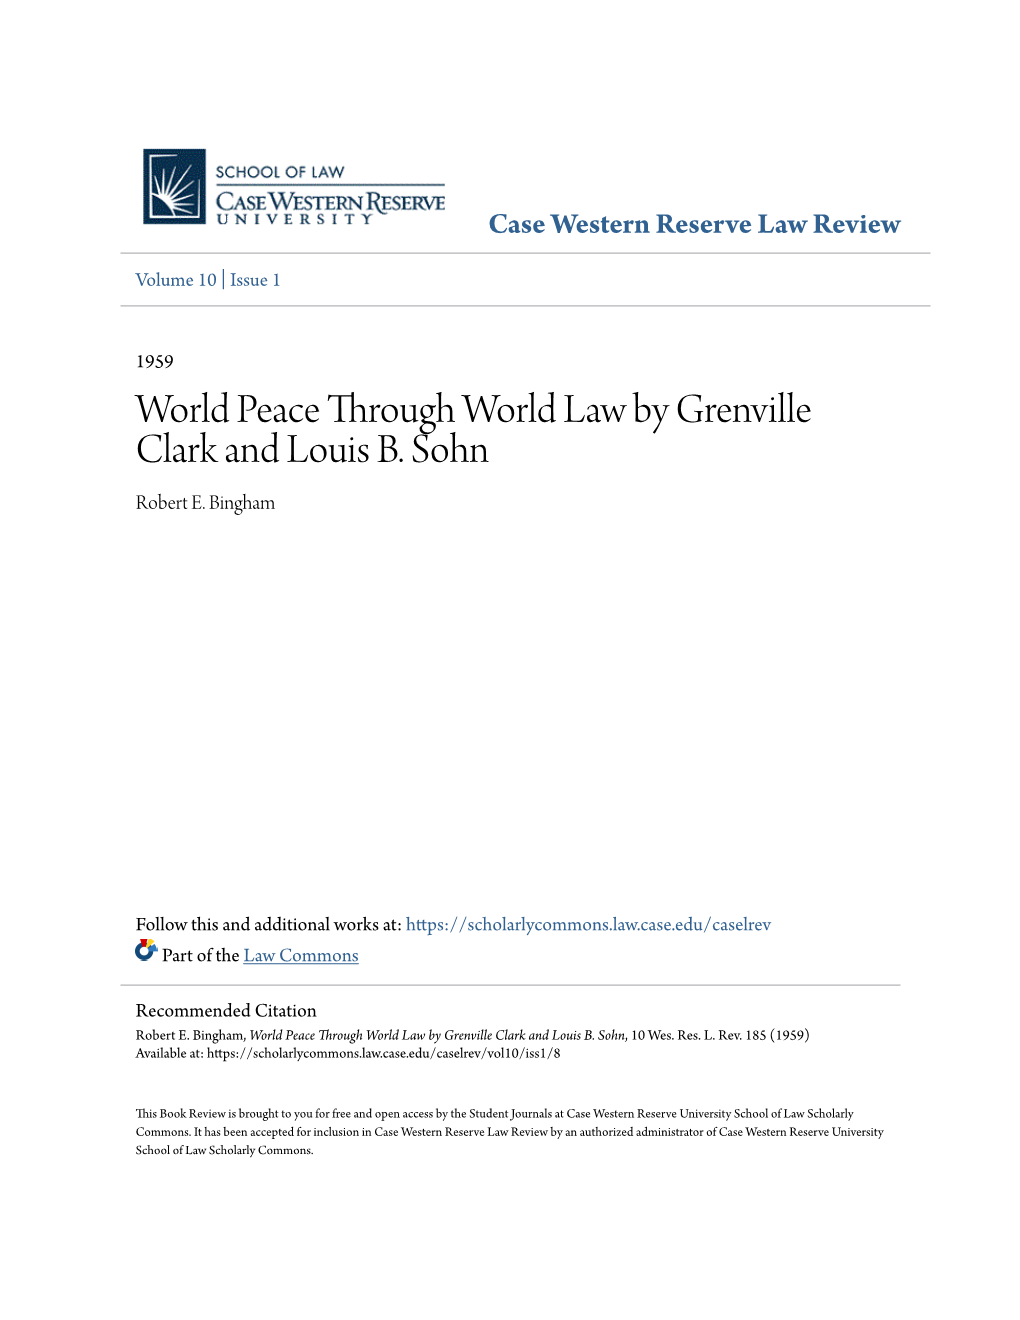 World Peace Through World Law by Grenville Clark and Louis B. Sohn Robert E